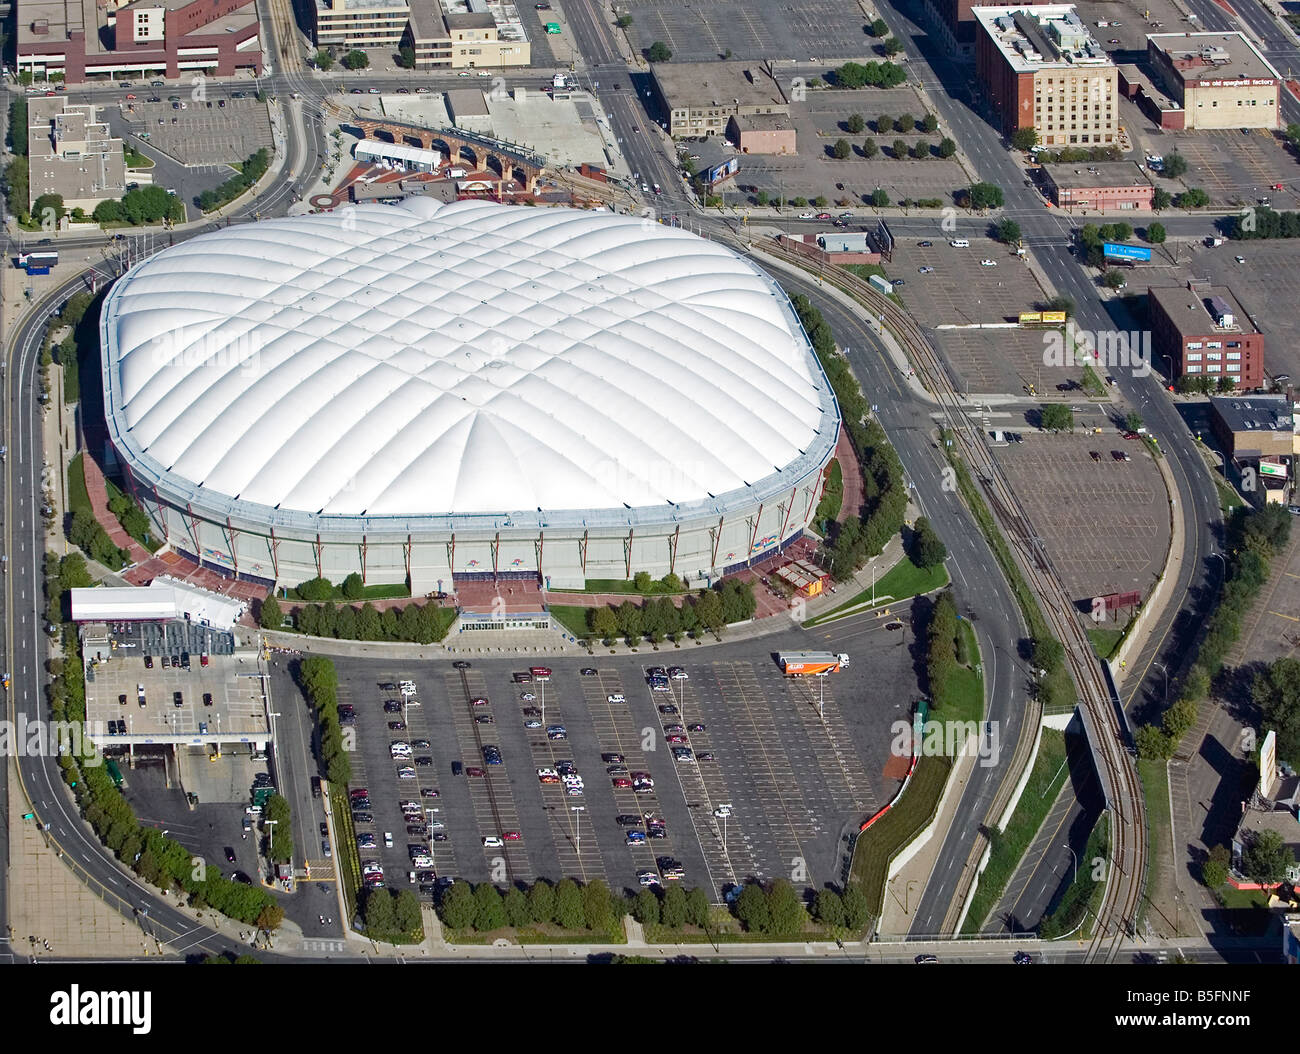 aerial-view-above-metrodome-stadium-minneapolis-minnesota-B5FNNF.jpg